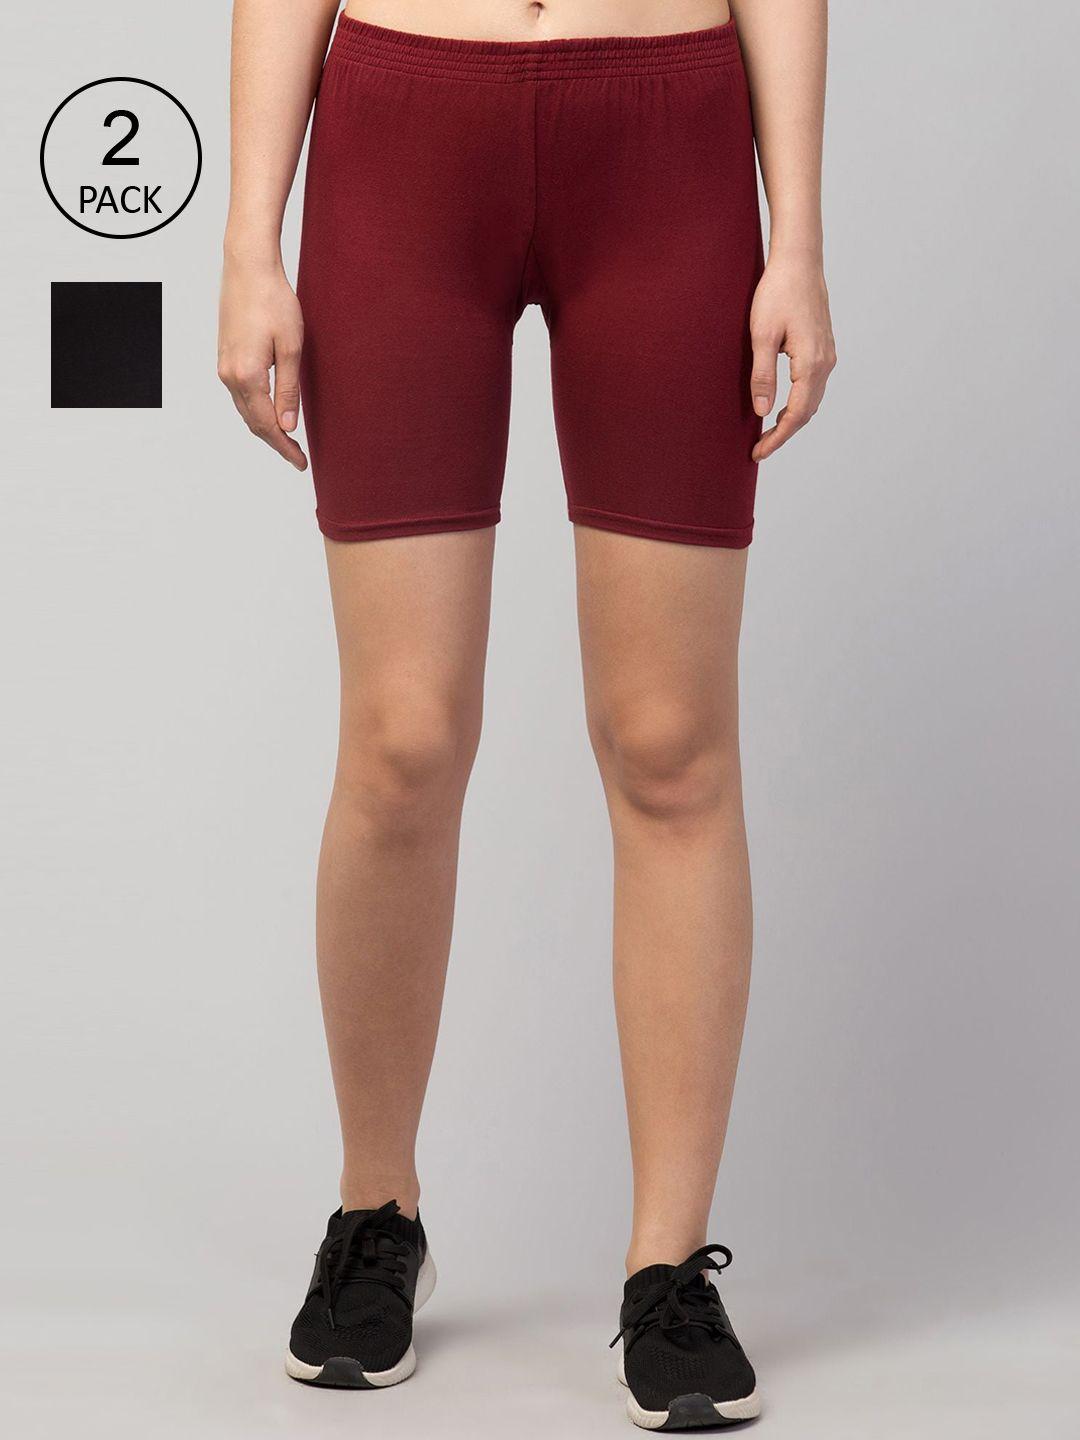 apraa & parma women maroon slim fit cycling sports set of 2 shorts